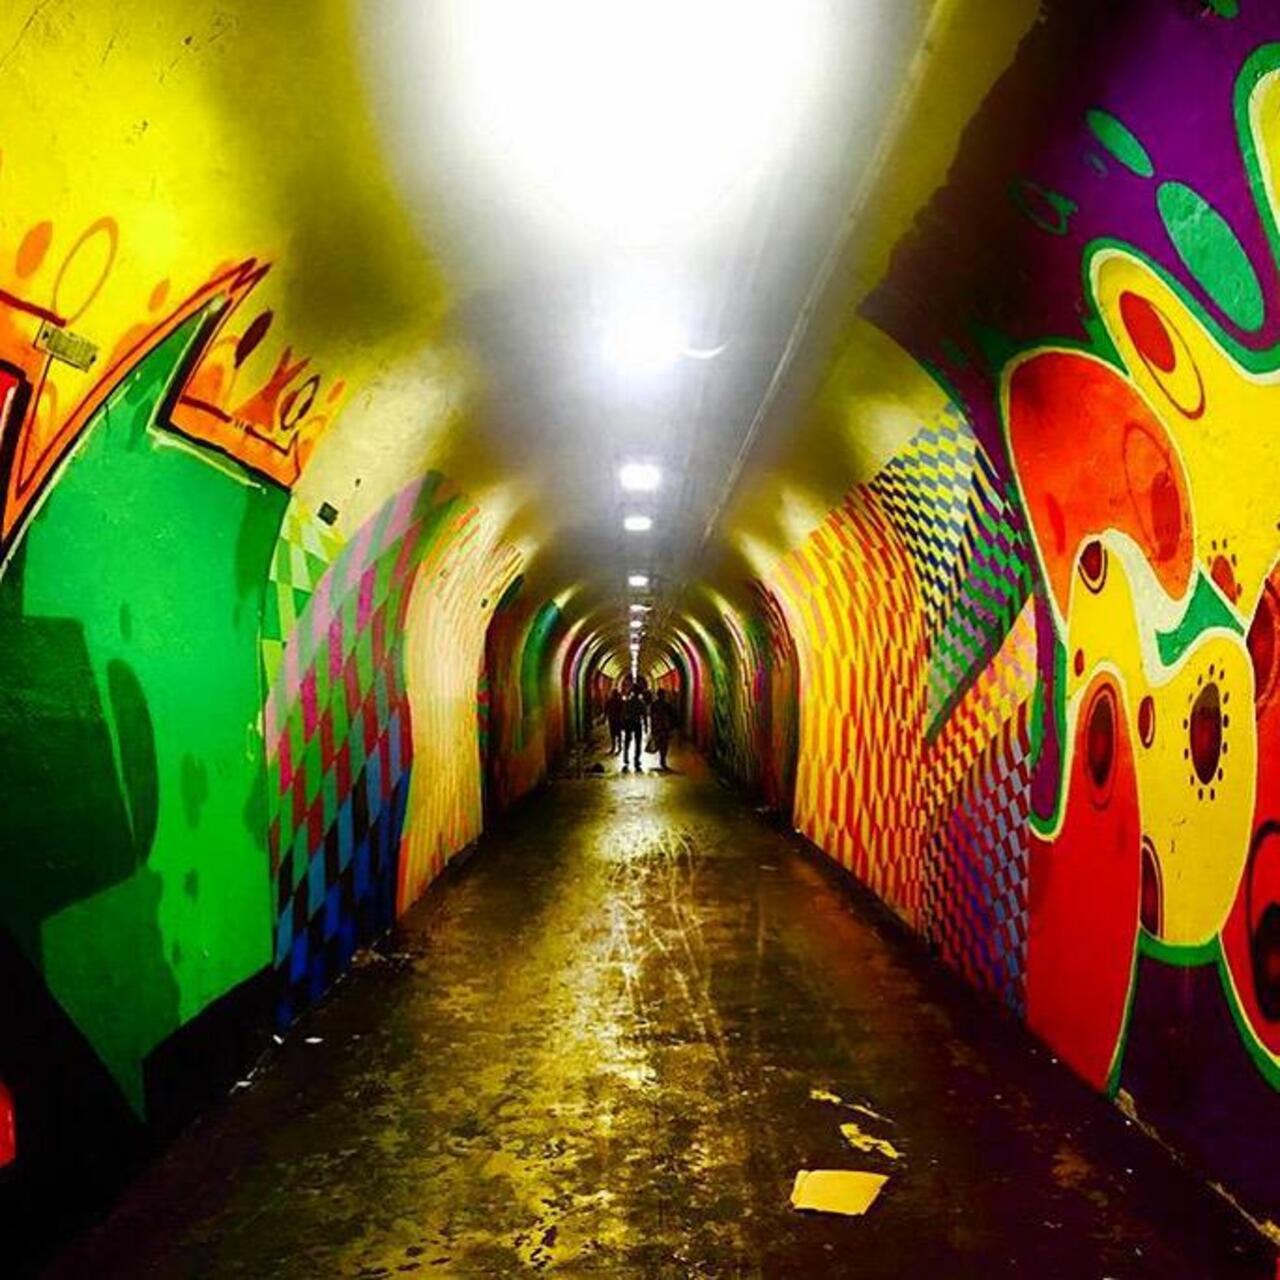 #subway  #NYC #graffiti #uptown #popart #streetart #sprayart #vibrant #mta #vivid #color #manhattan #gotham#urbanart http://t.co/adQWOm9Ax7